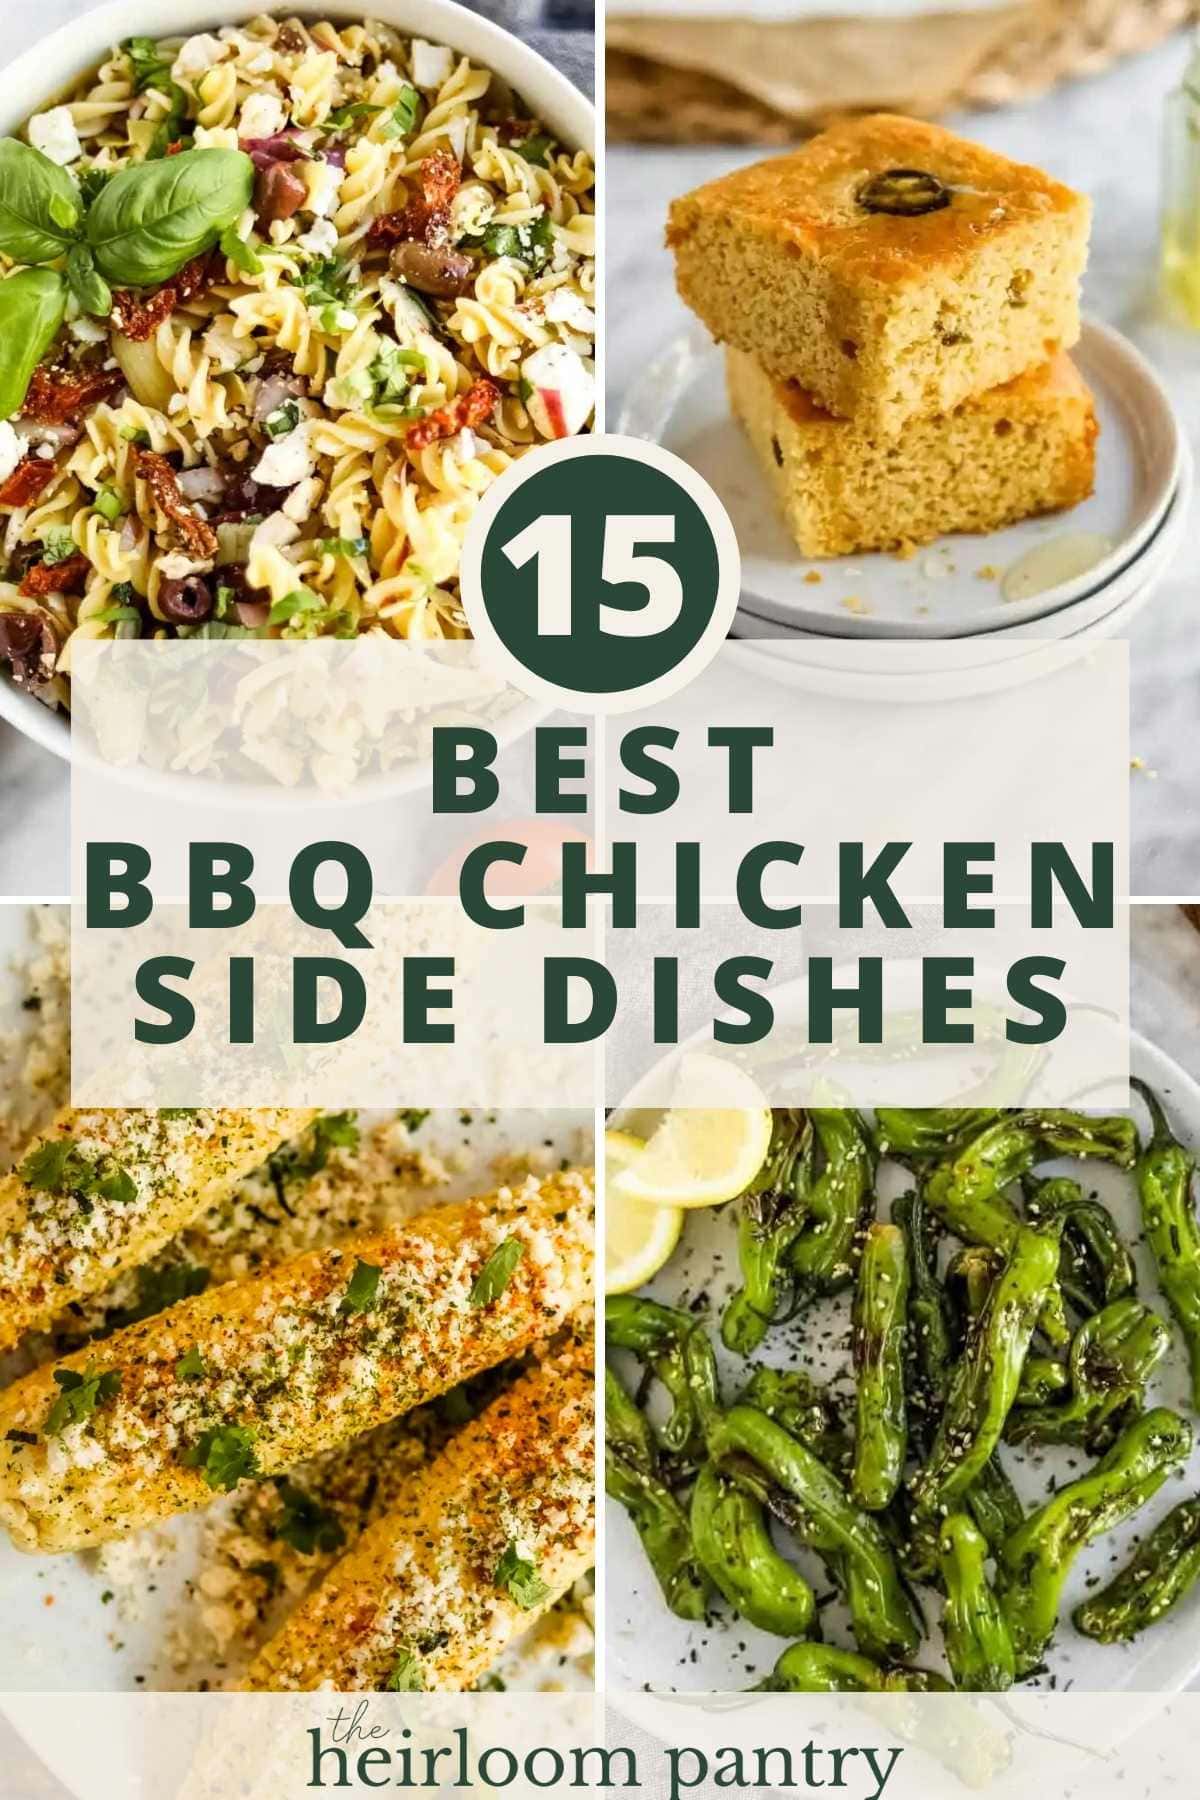 List of 15 best sides for BBQ chicken.